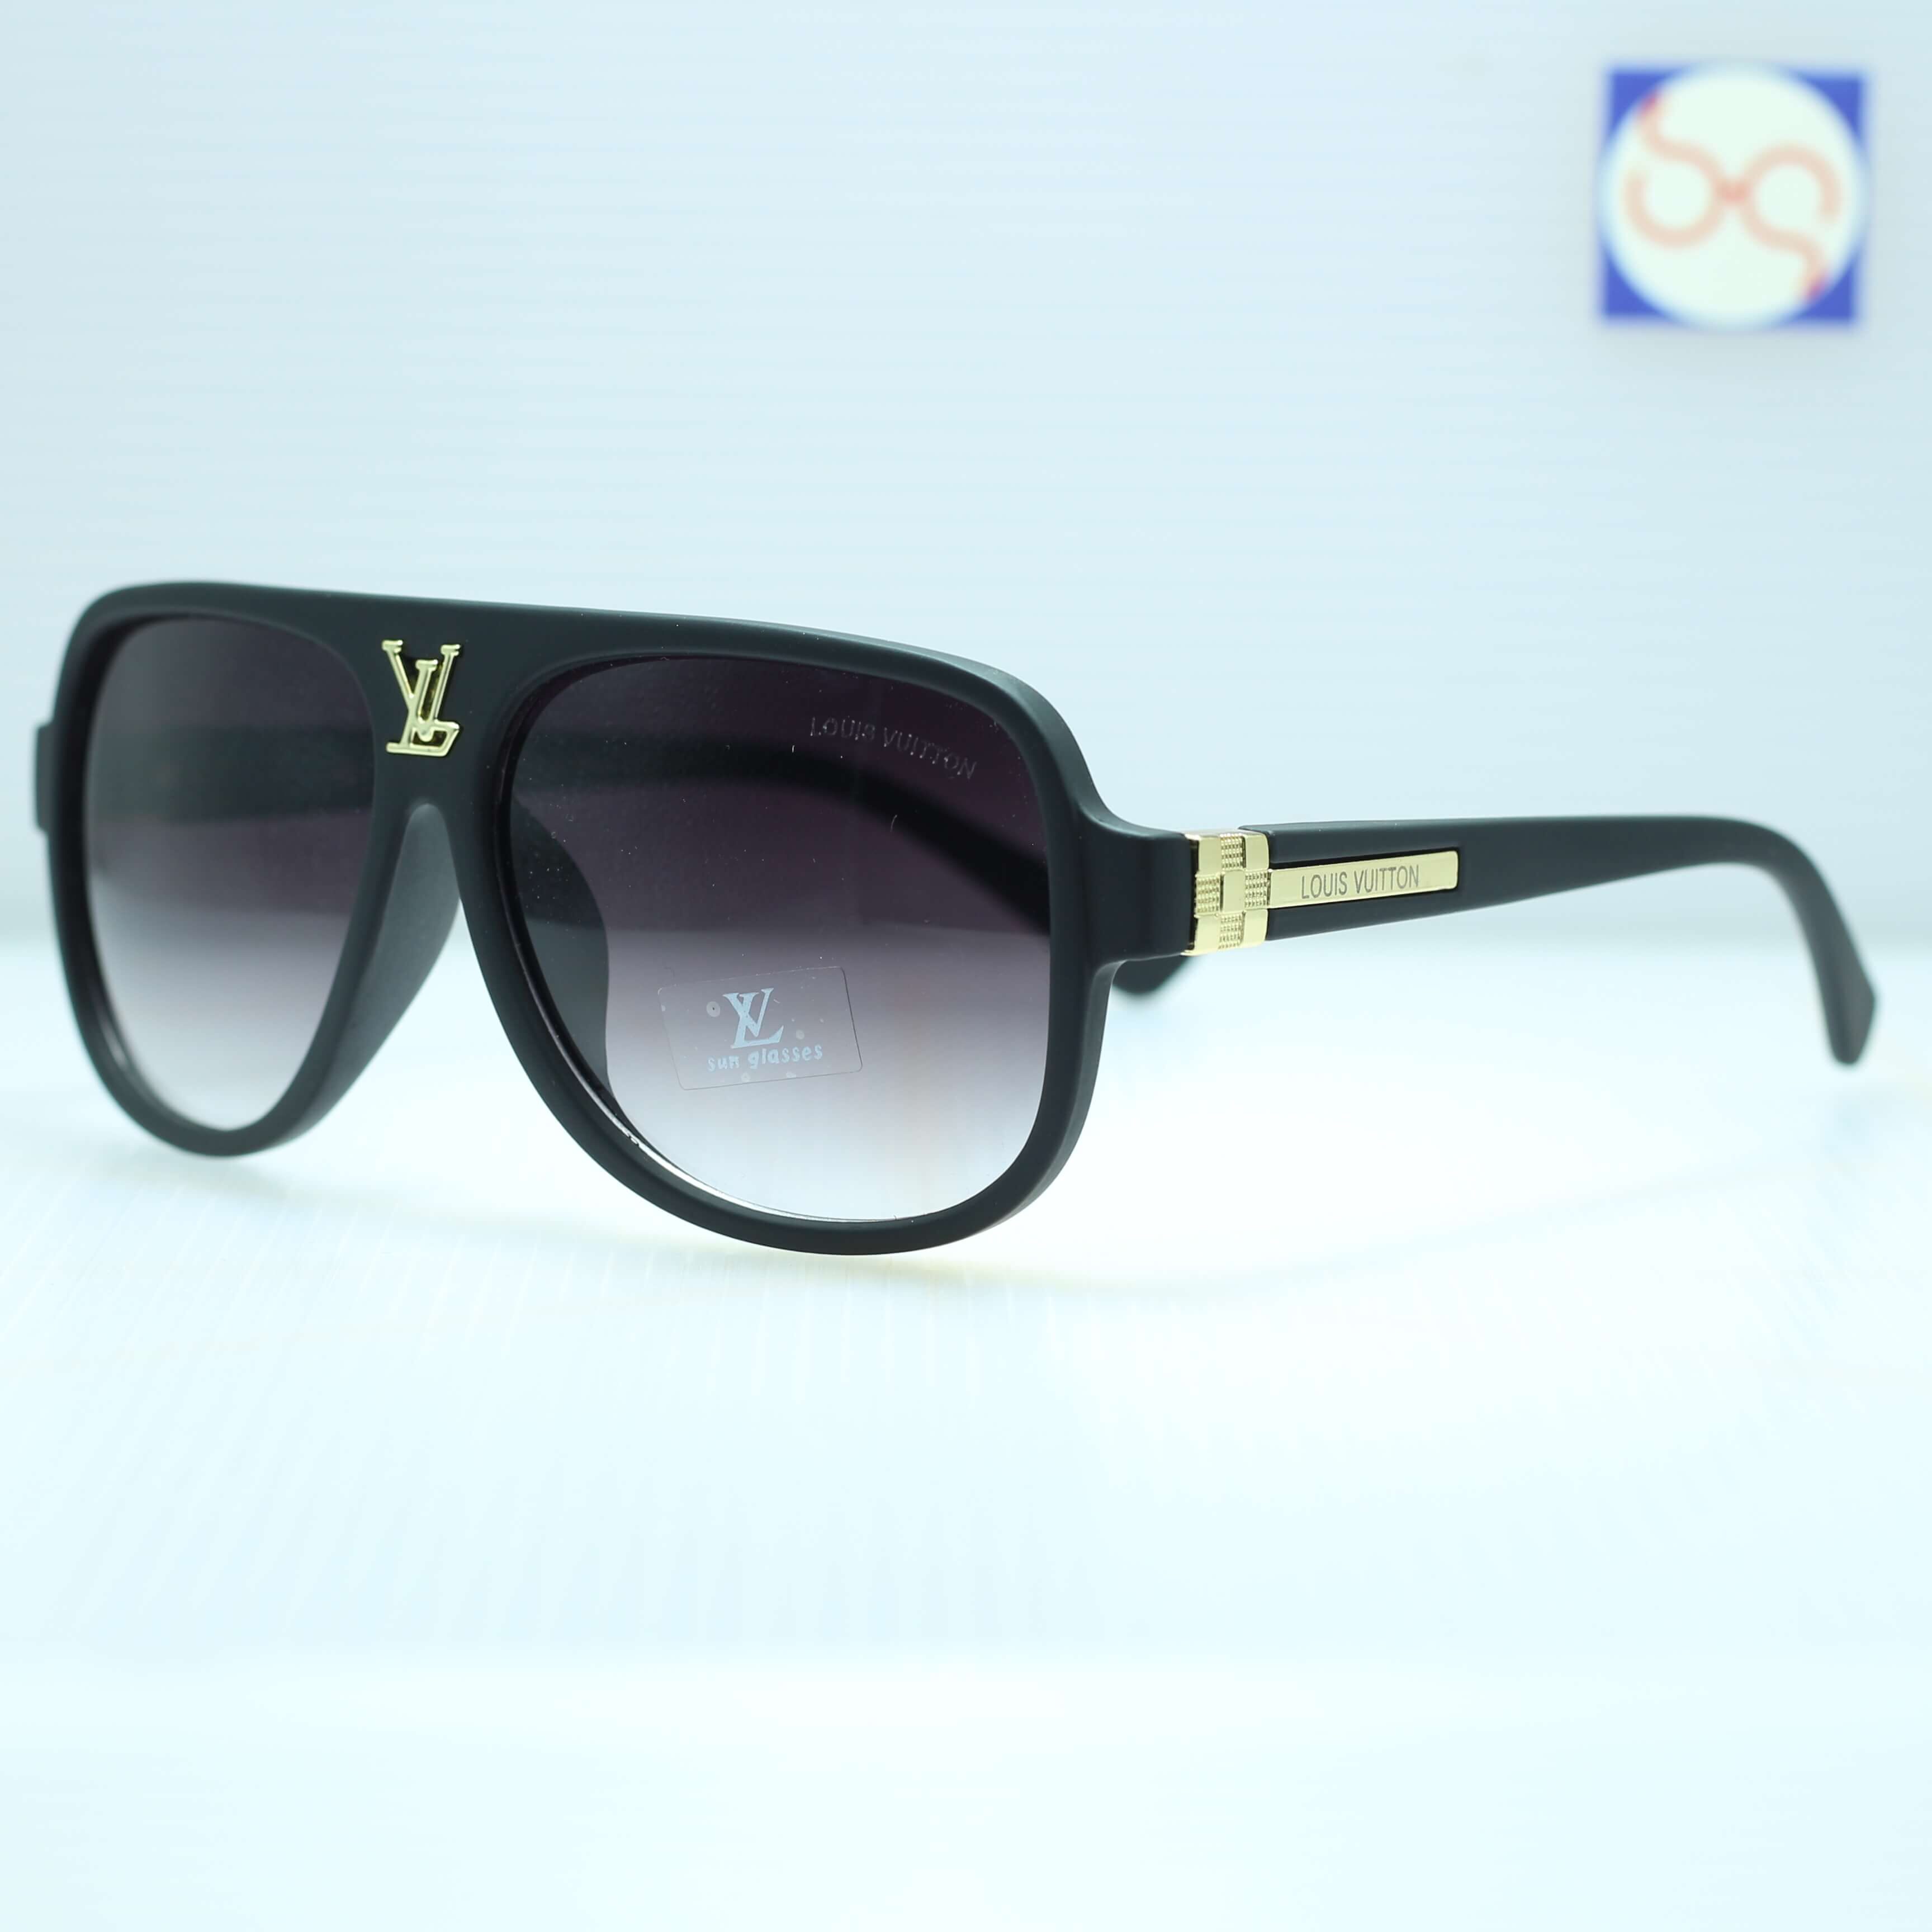 Buy Louis Vuitton (LV) Sunglasses in Pakistan